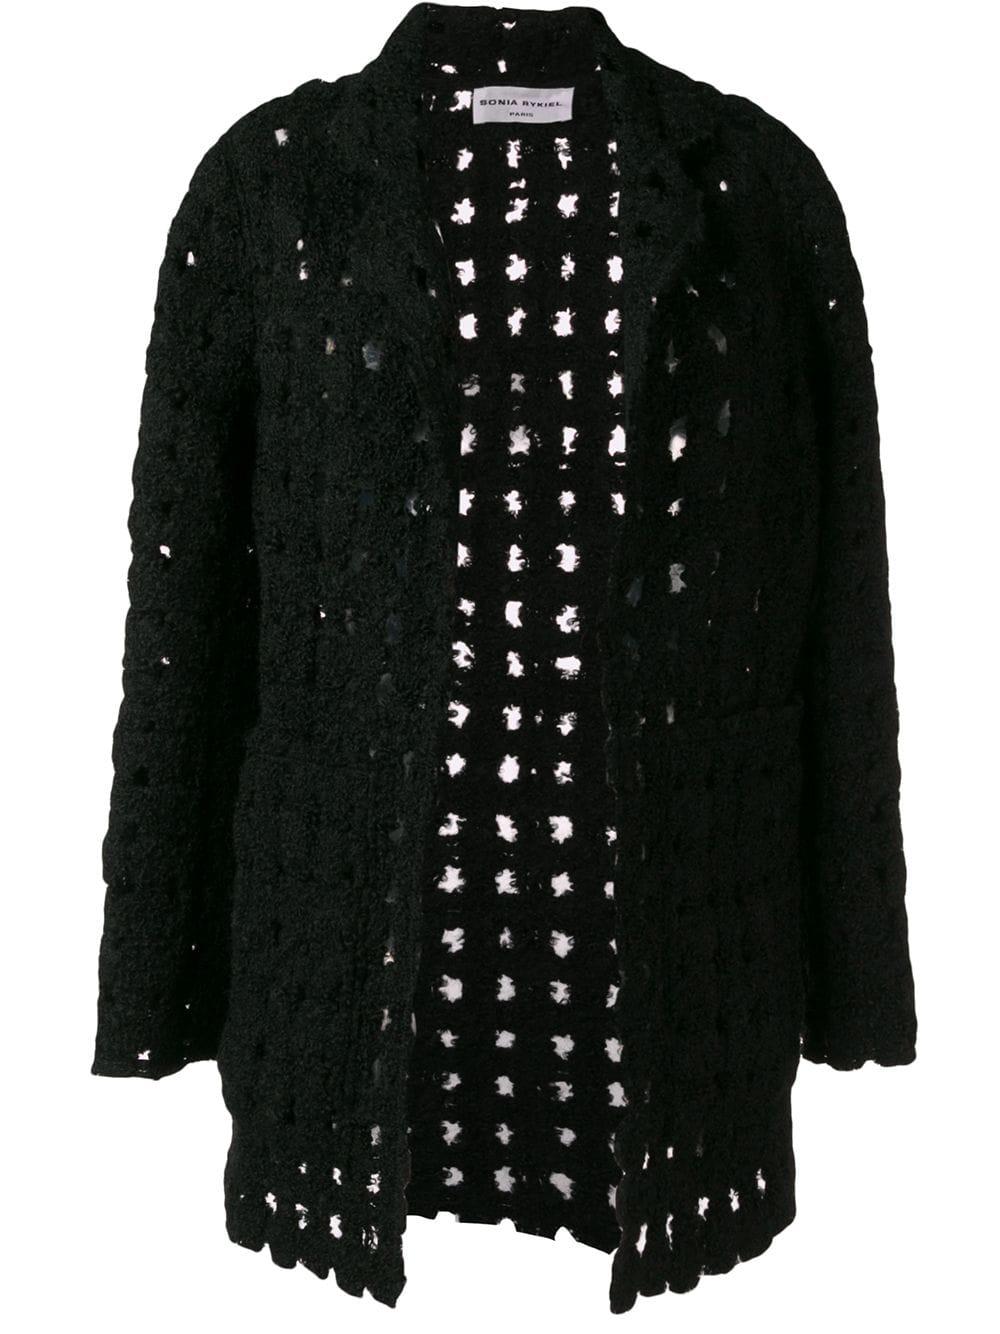 Sonia Rykiel Embroidered Geometric Jacket - Black | ModeSens